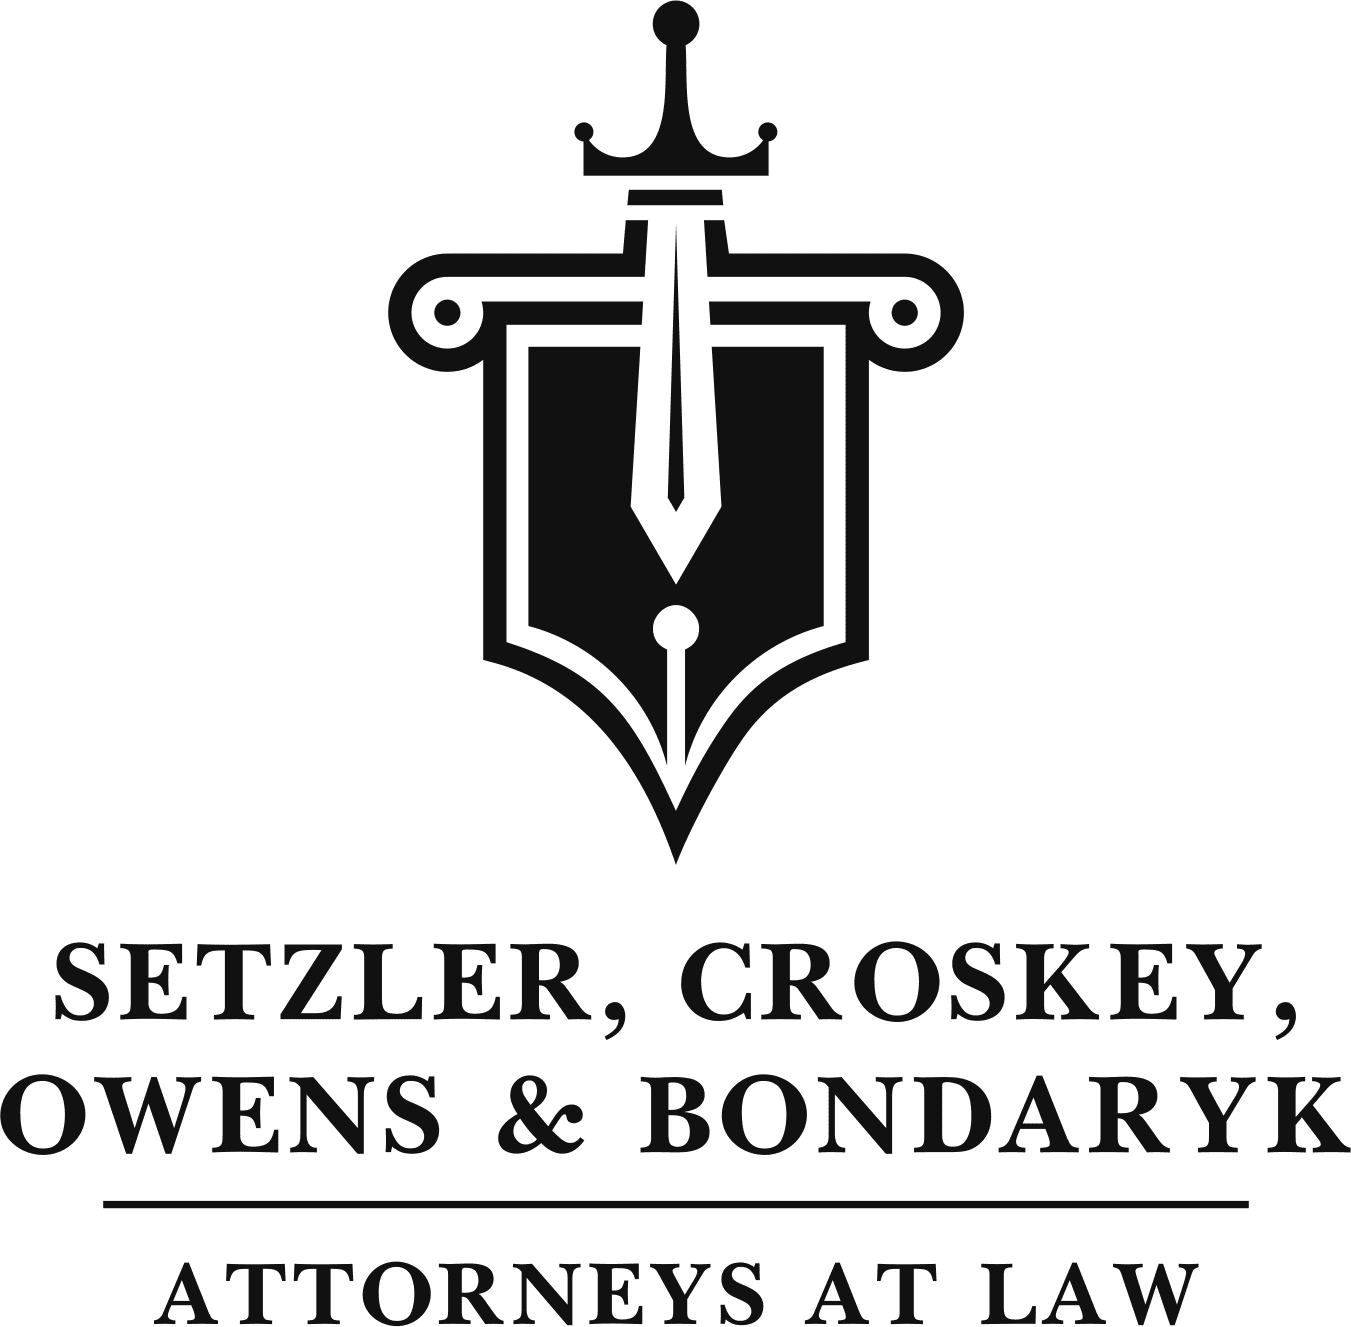 Setzler Croskey Owens & Bondaryk Attorneys at Law